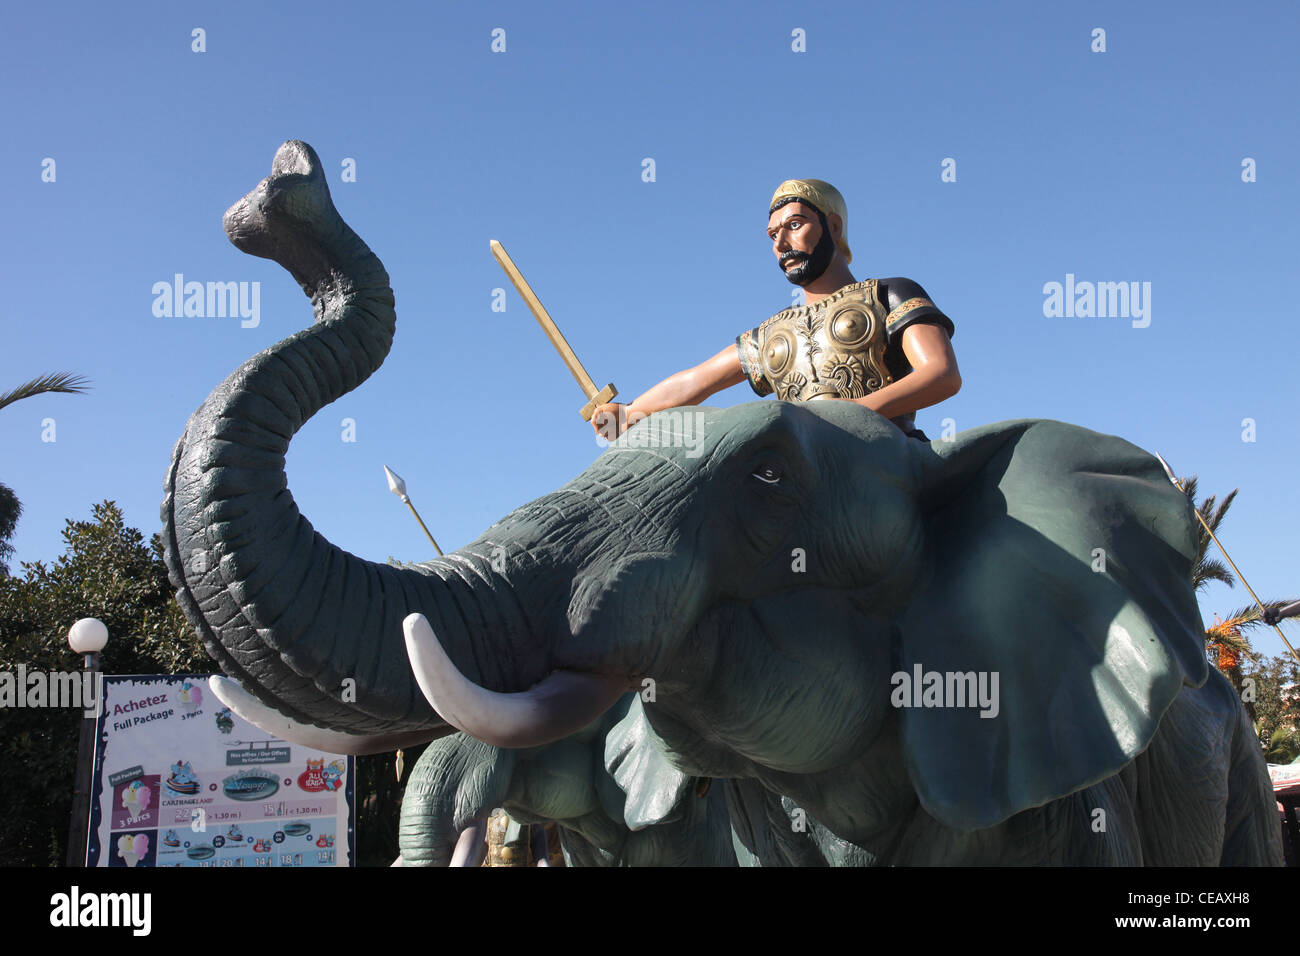 Hannibal riding on an elephant Stock Photo